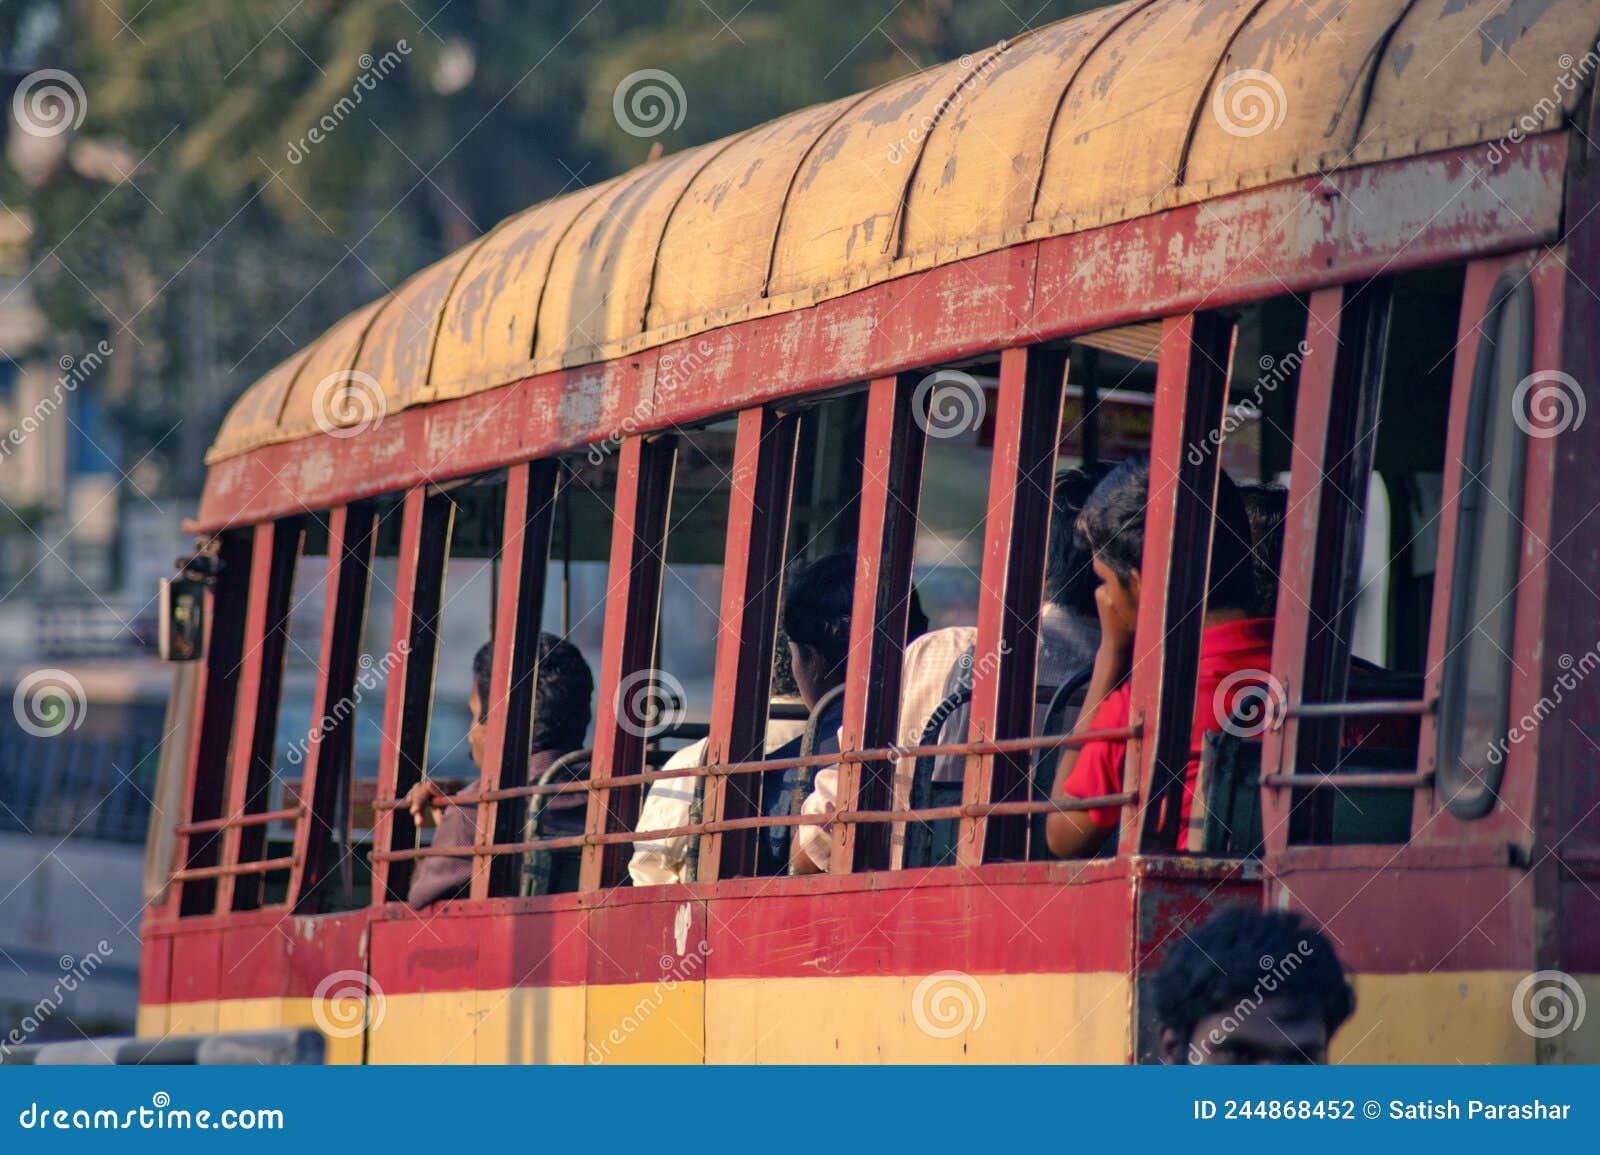 trivandrum city tour bus